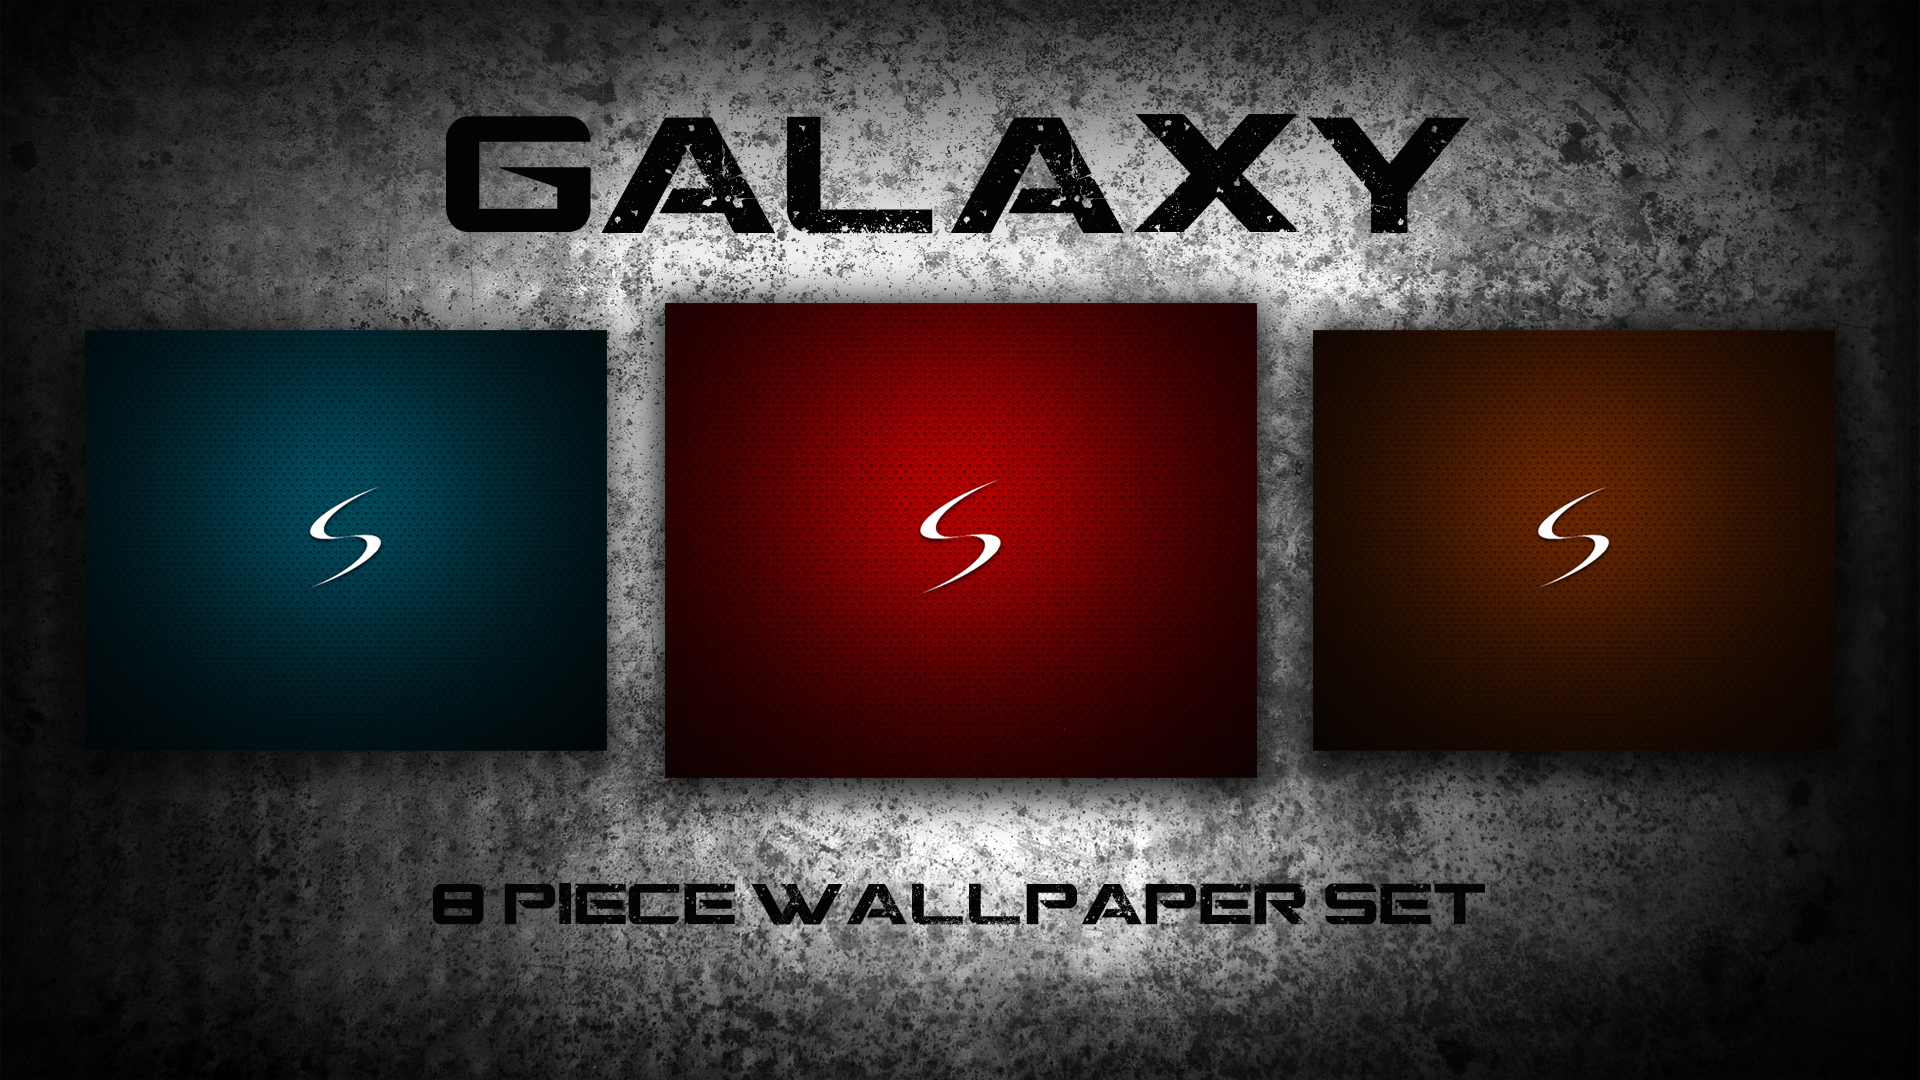 Galaxy-S Wallpaper Set by bobakazooboy on DeviantArt